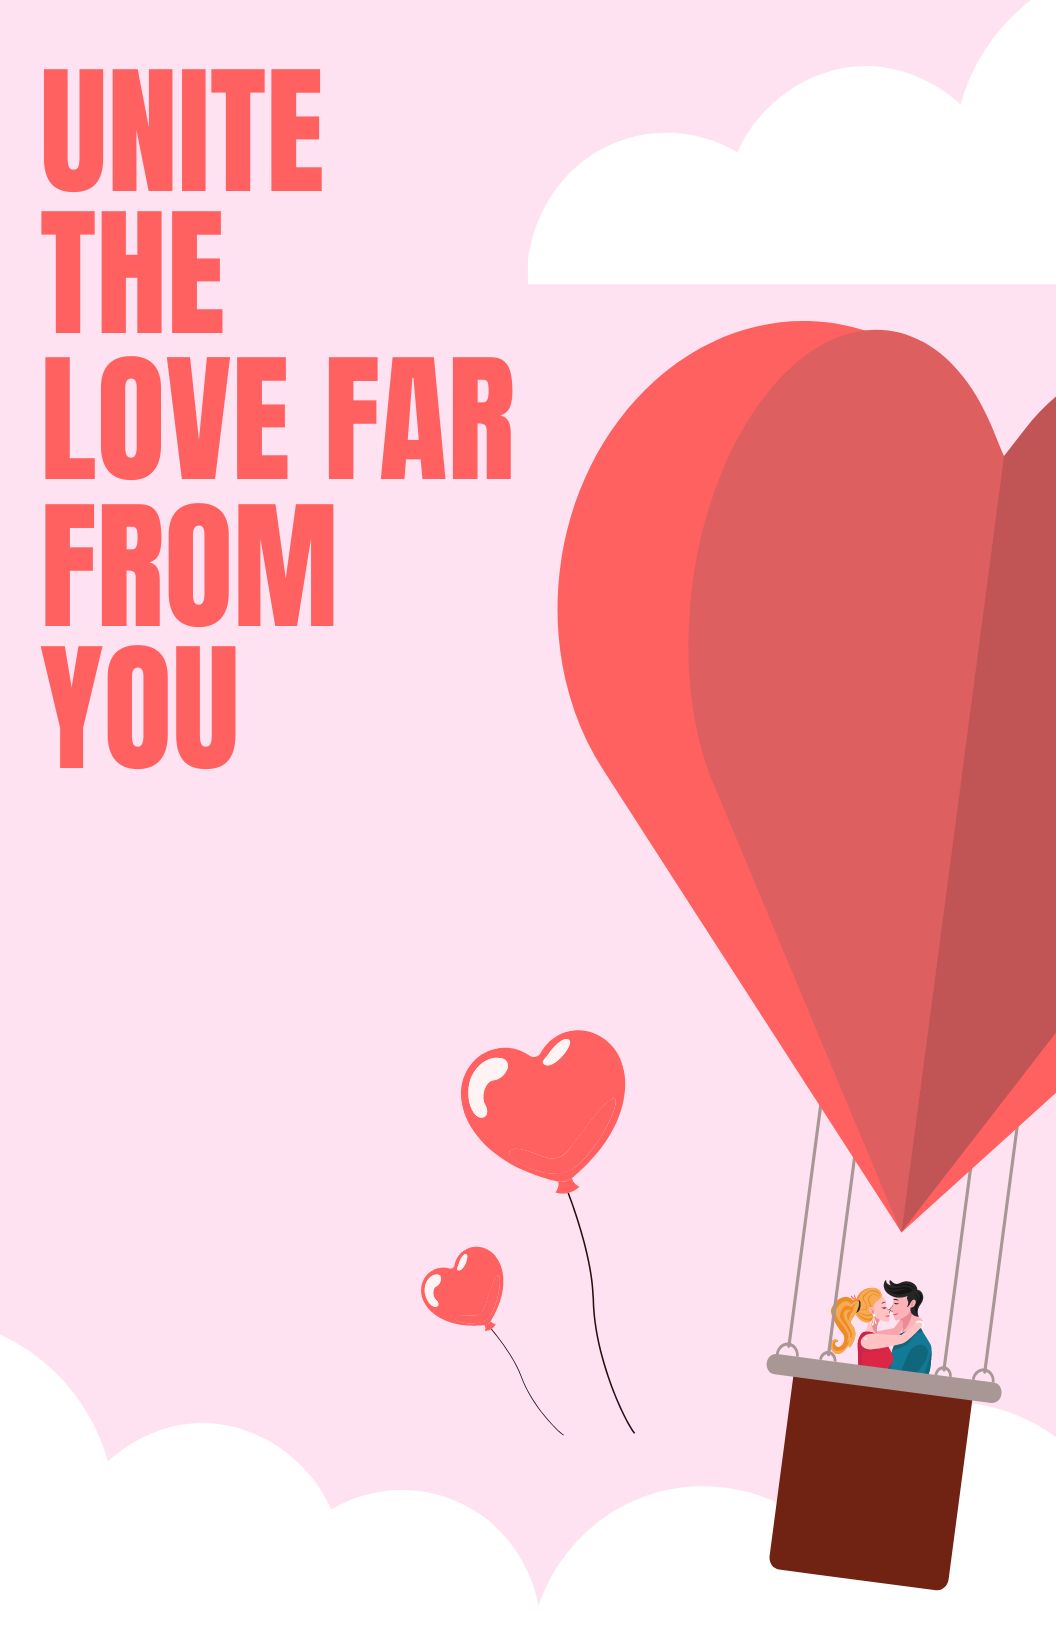 Valentine's Day Poster